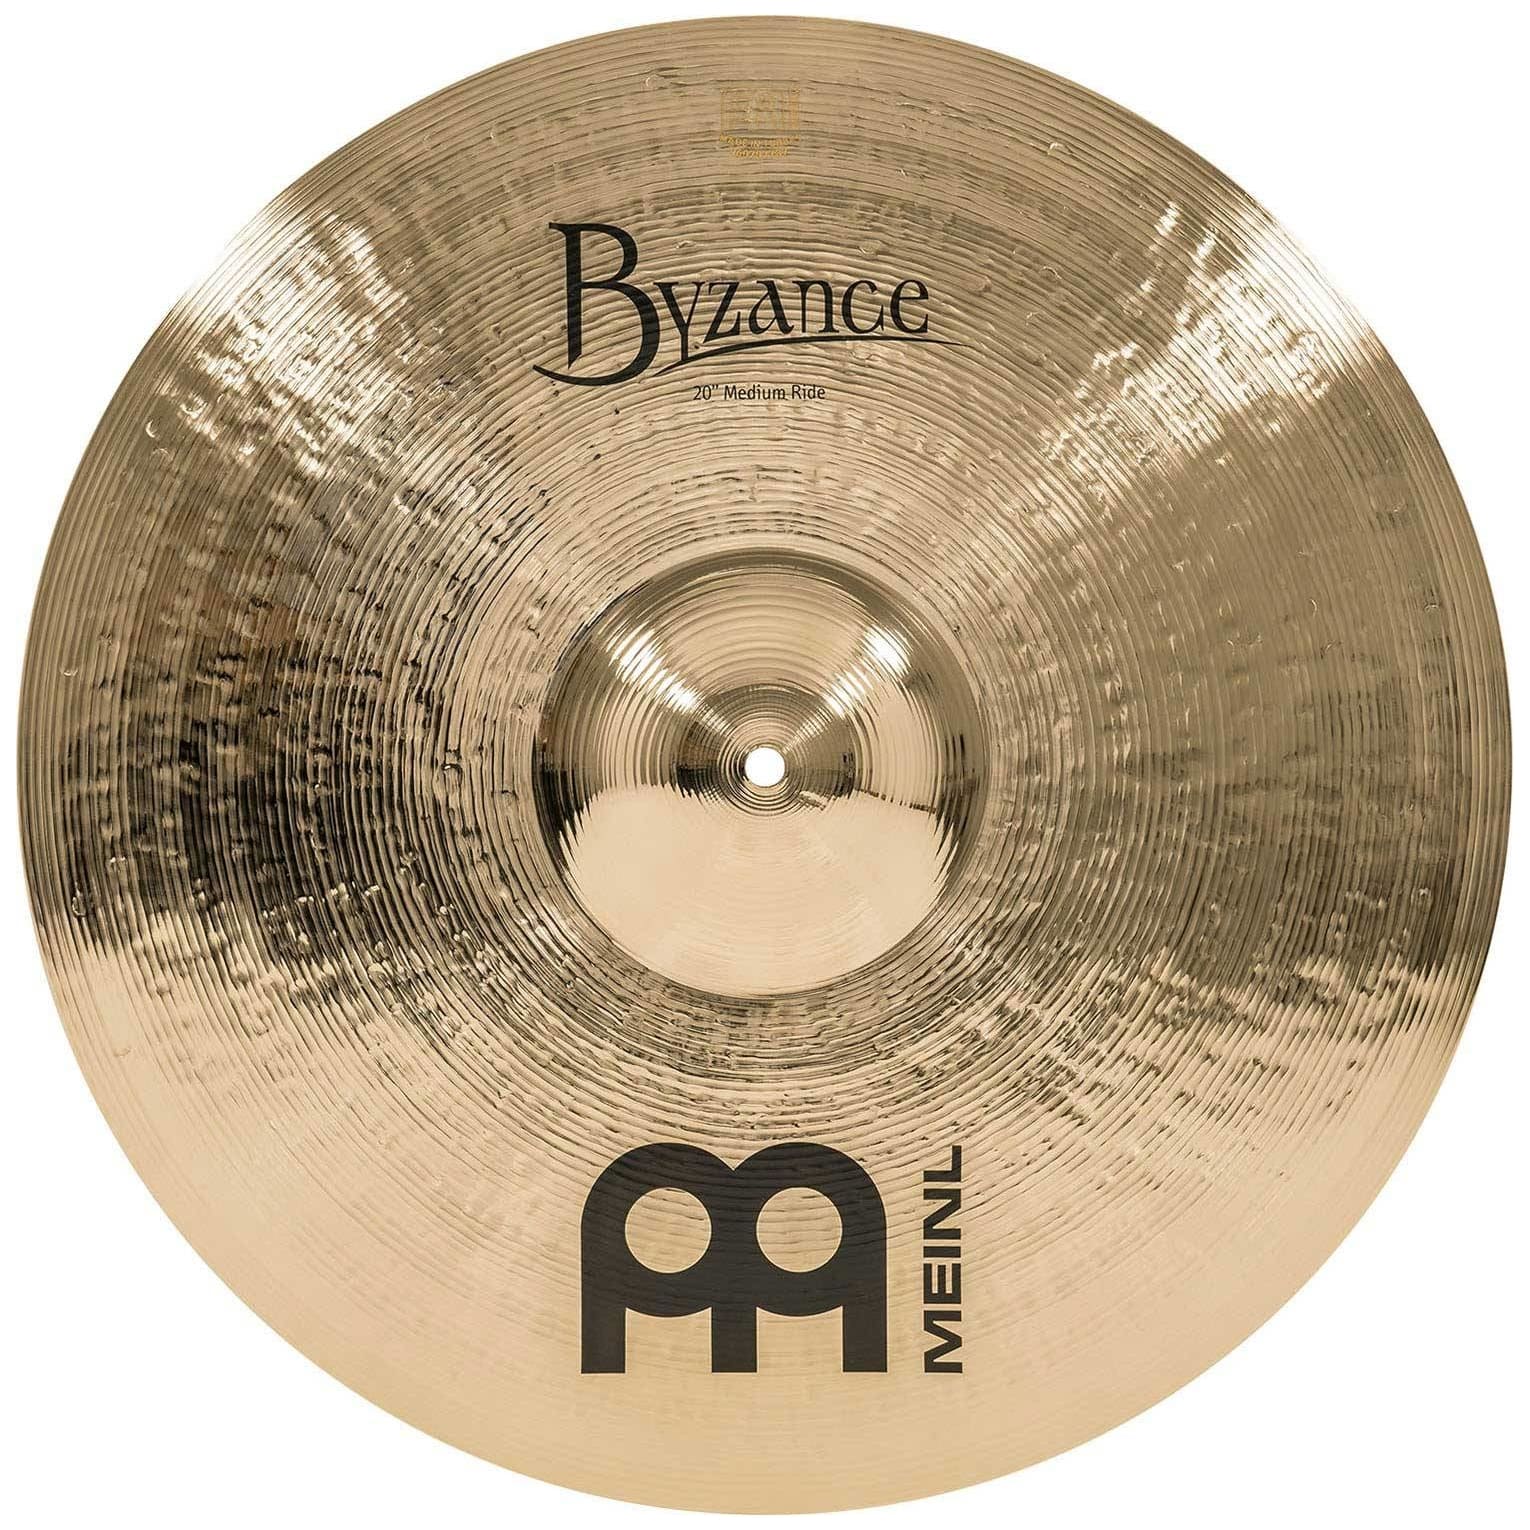 Meinl Cymbals 20" Byzance Brilliant Medium Ride B-Ware